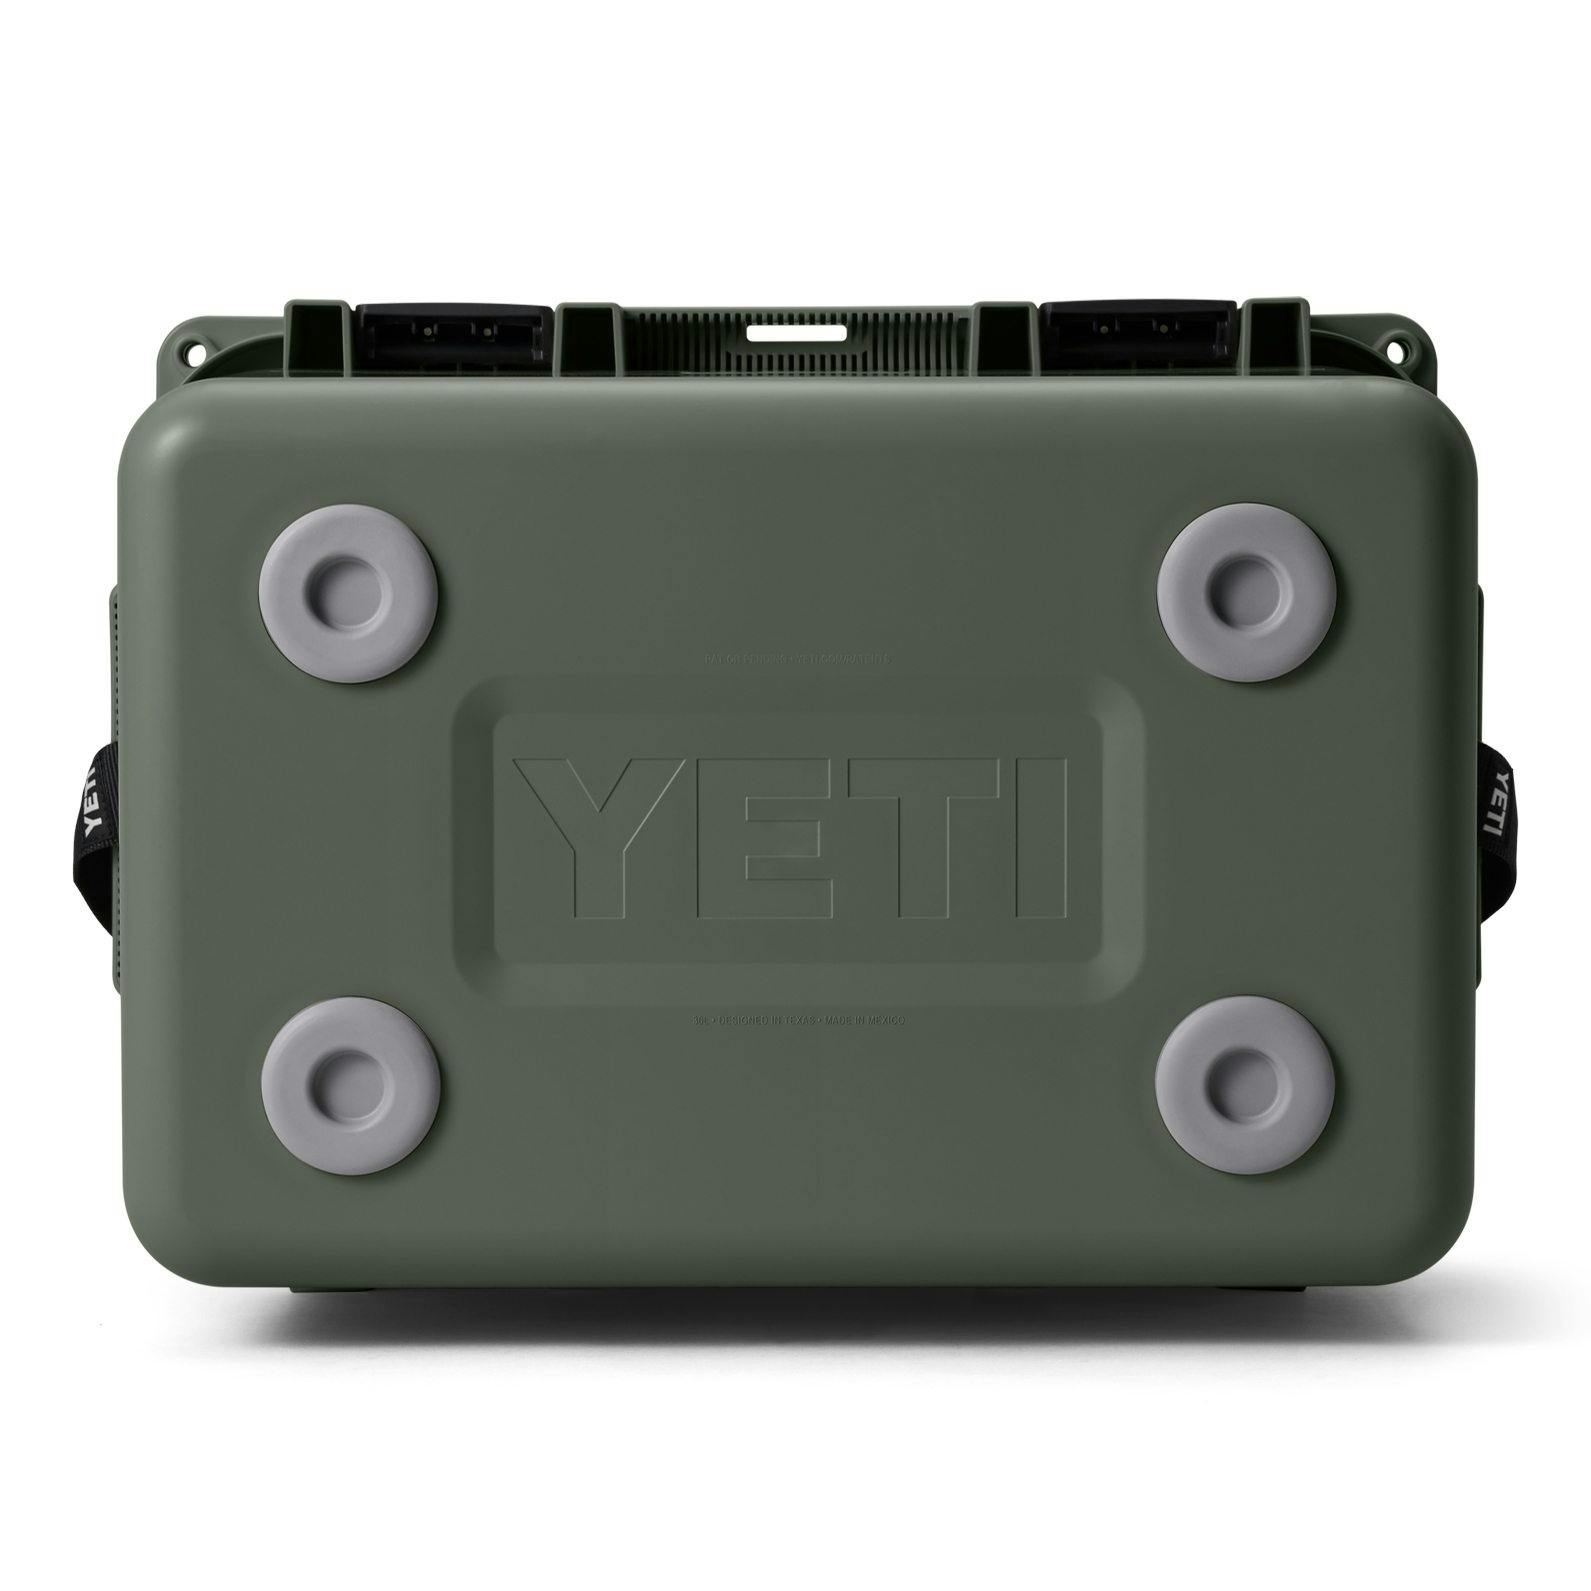 Yeti LoadOut GoBox 60 Gear Case – Camp Green